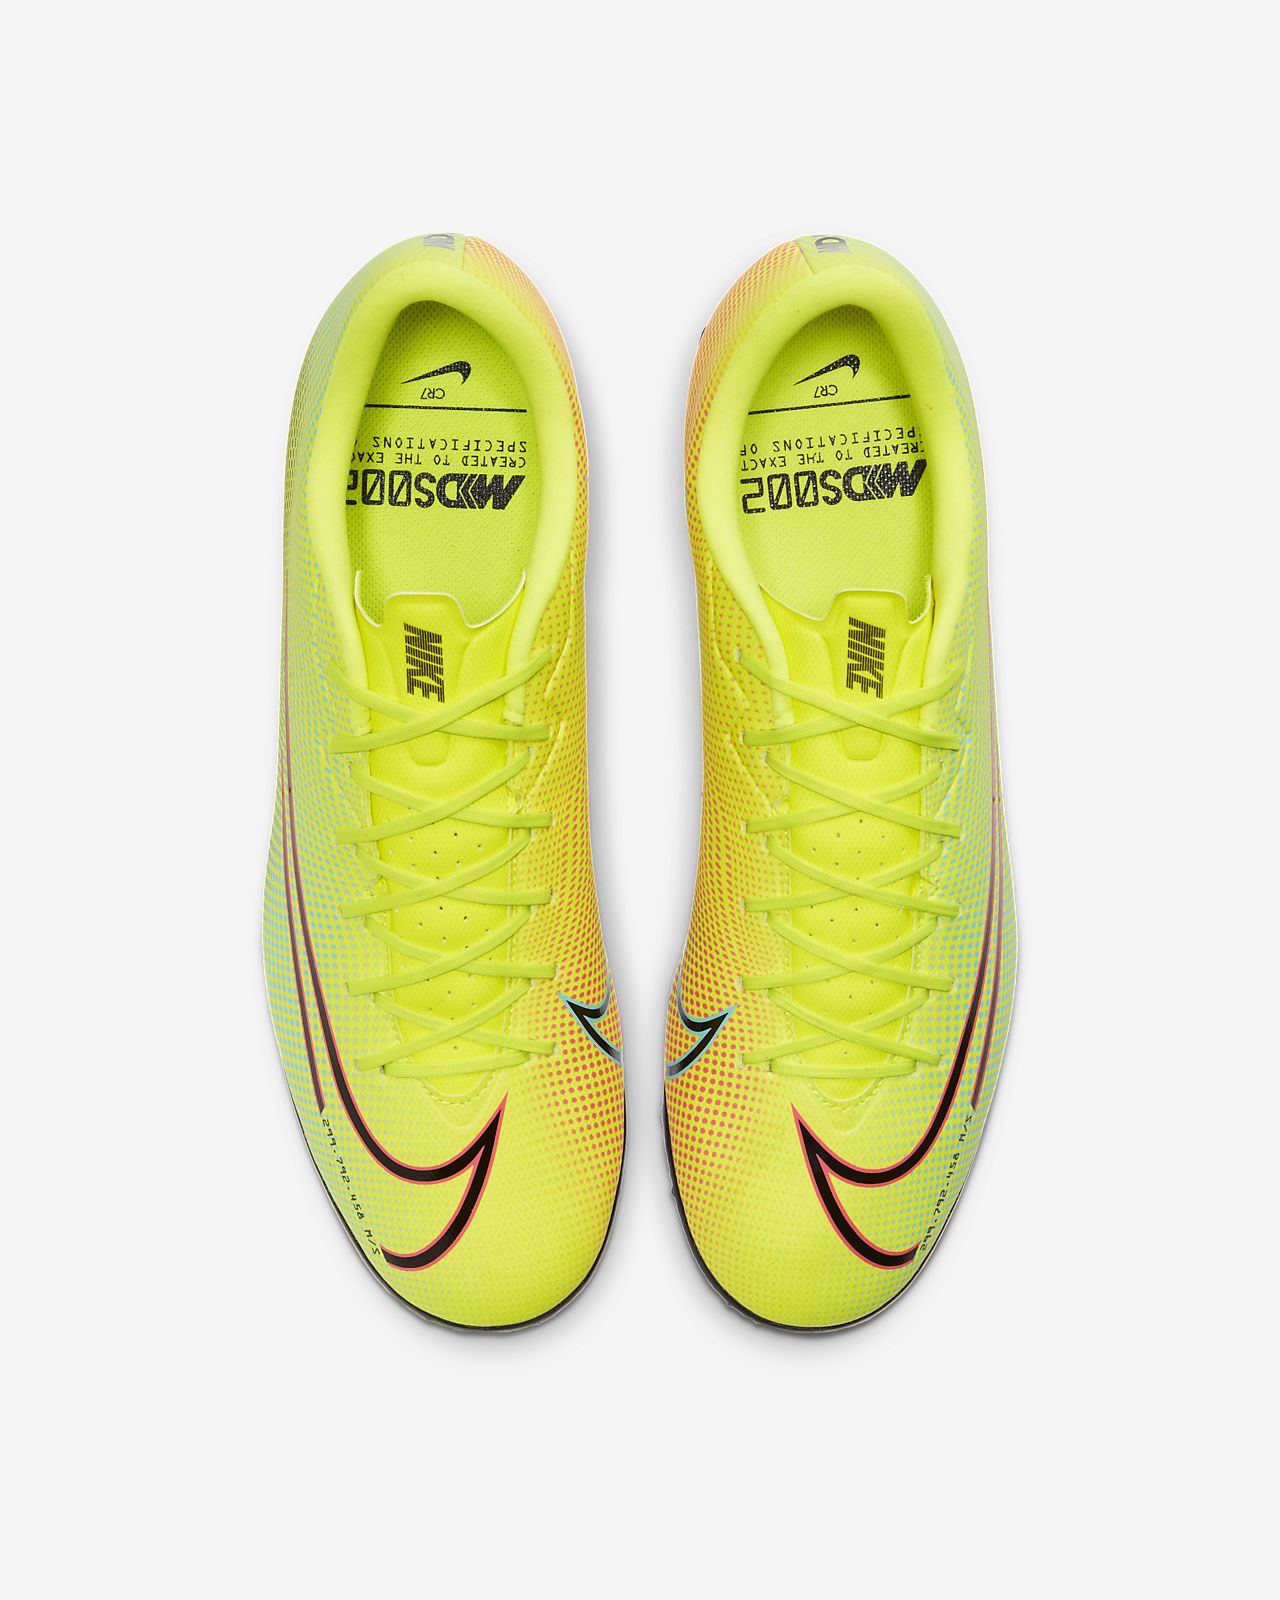 Nike Vapor 13 Elite AG PRO R GOL.com Football boots.